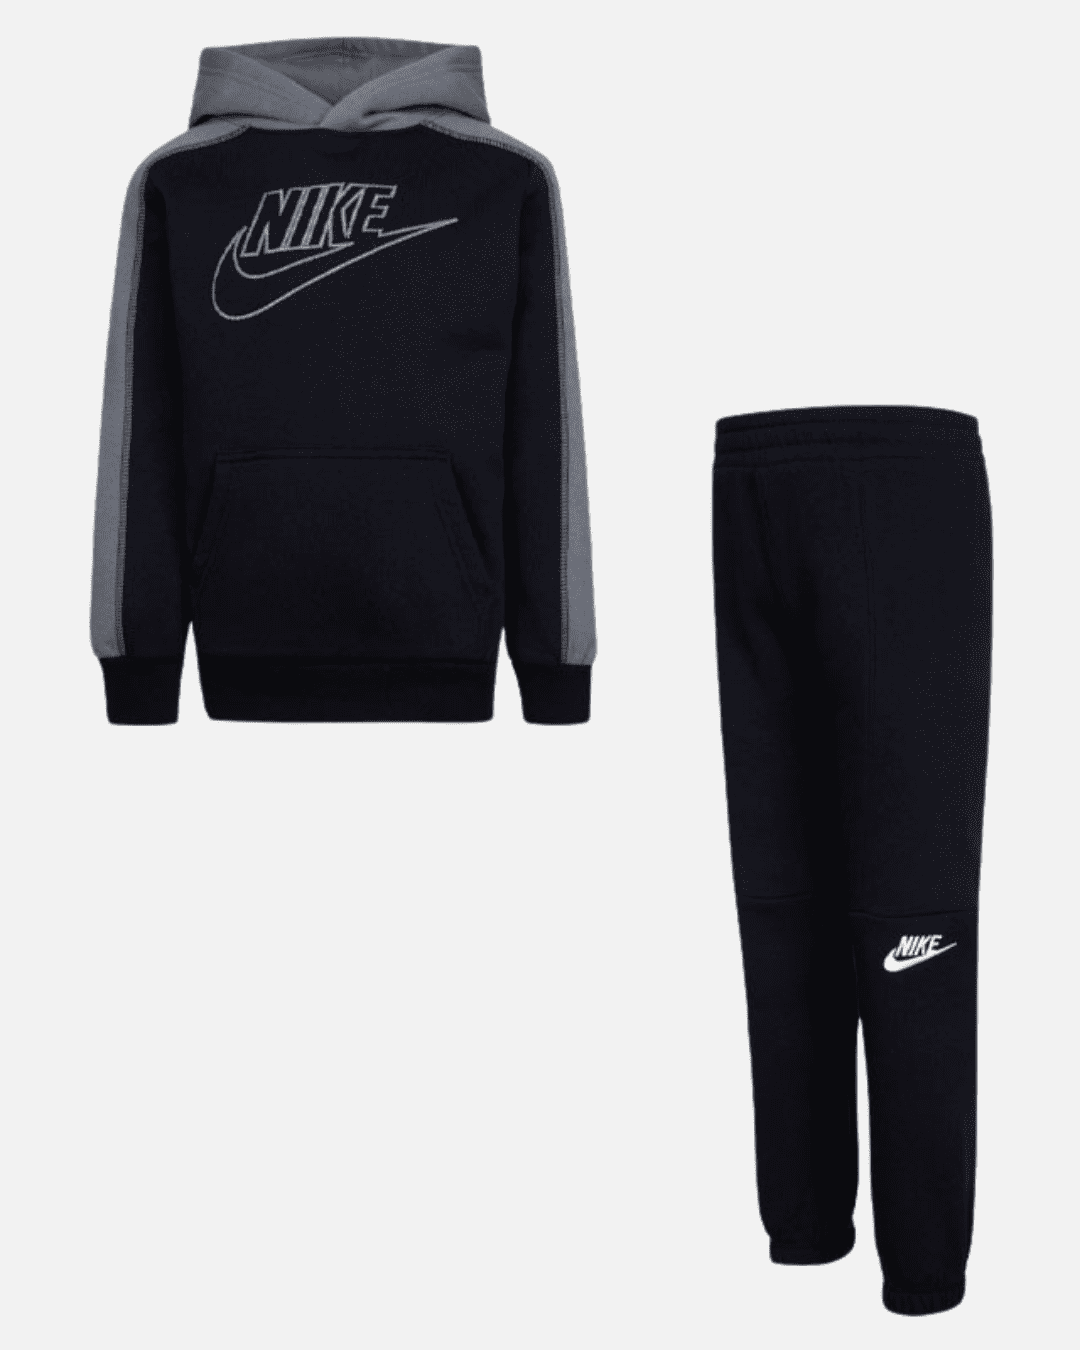 Nike Amplify PO Kids' Set - Black/Grey